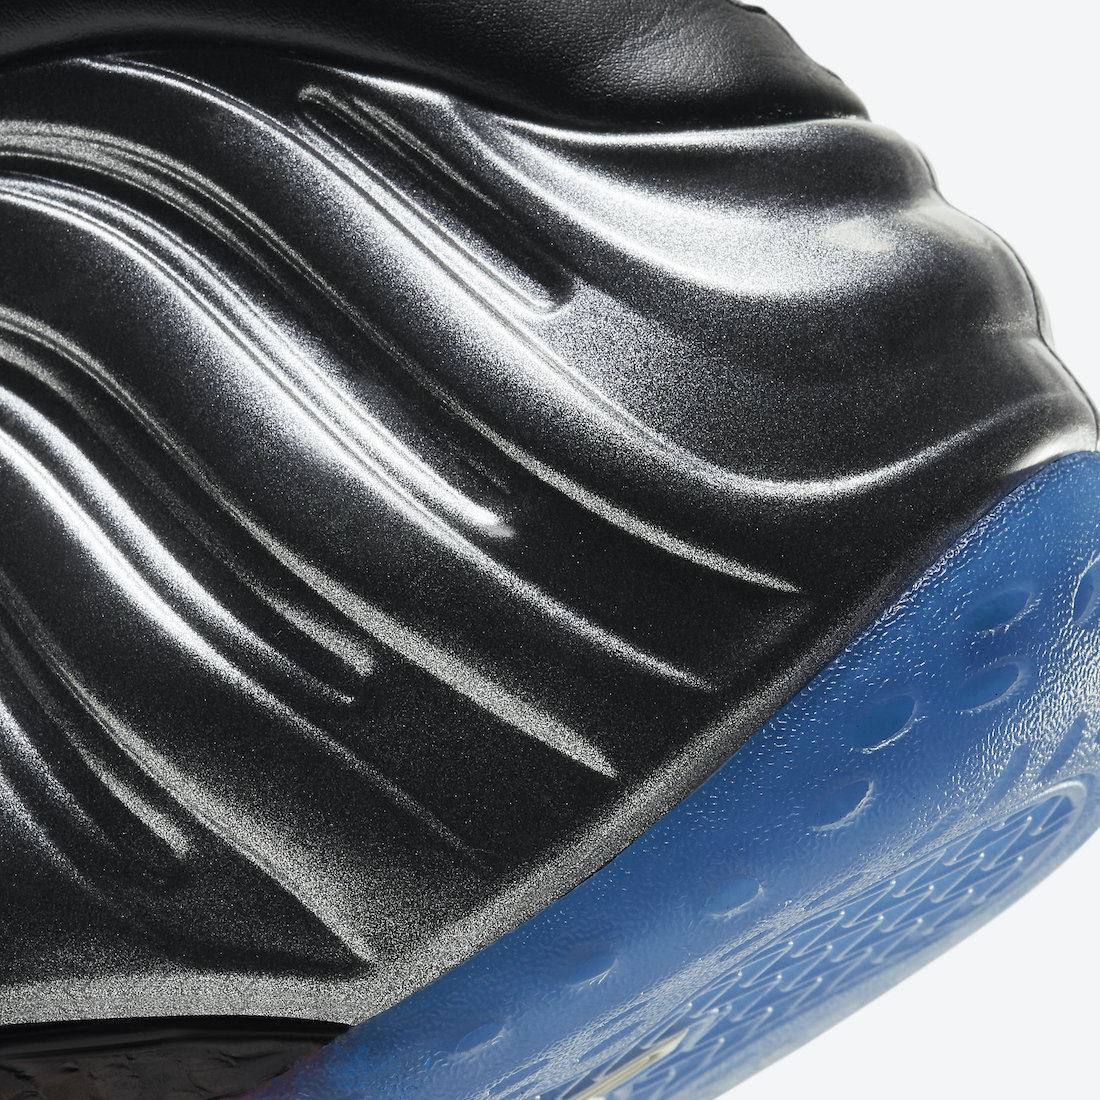 Nike-Air-Foamposite-One-Gradient-Soles-CU8063-001-Release-Date-7